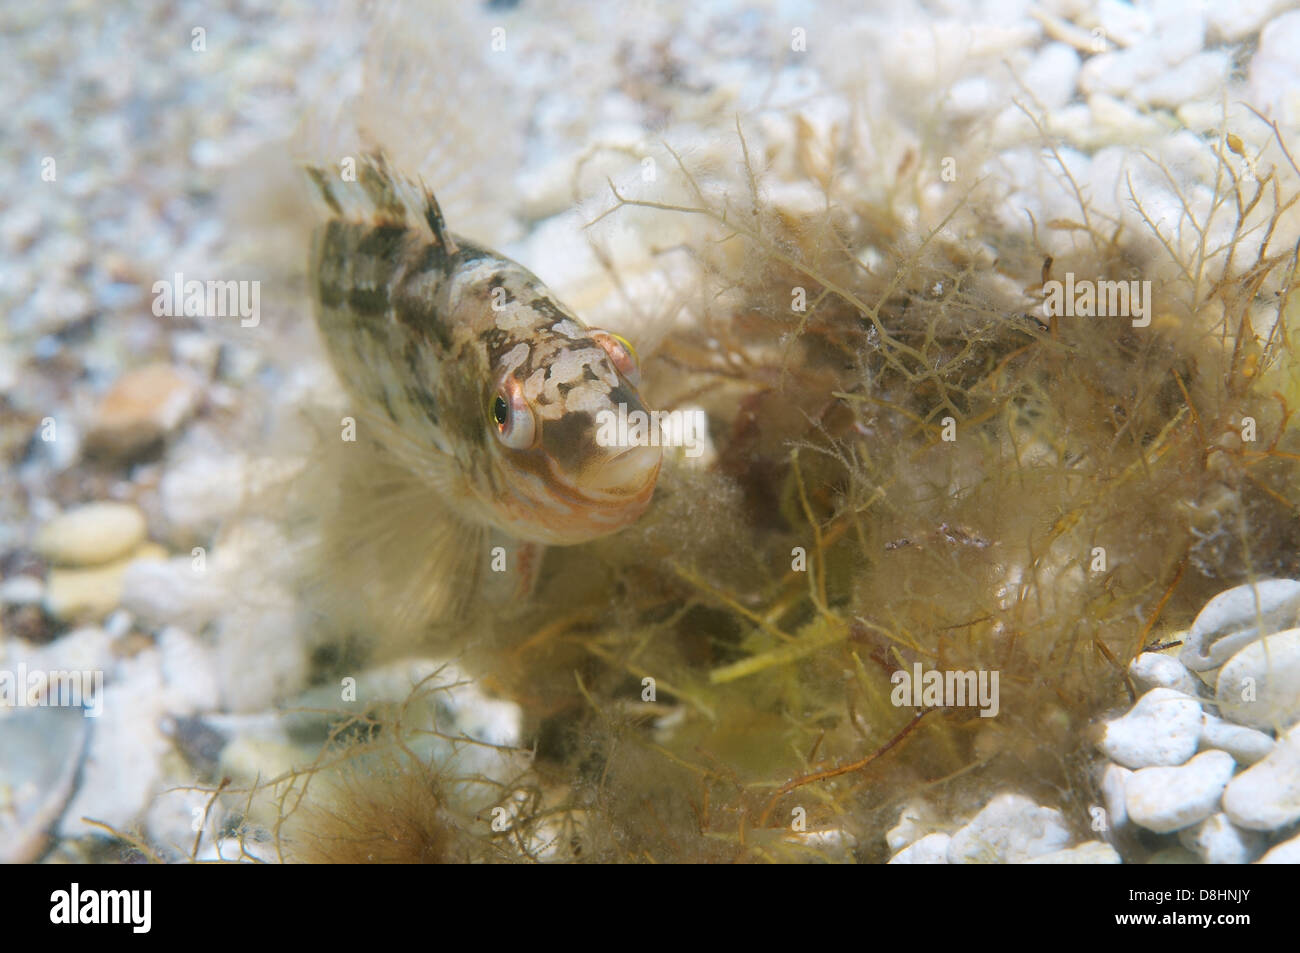 Grey wrasse (Symphodus cinereus) on the nest, Black sea Stock Photo